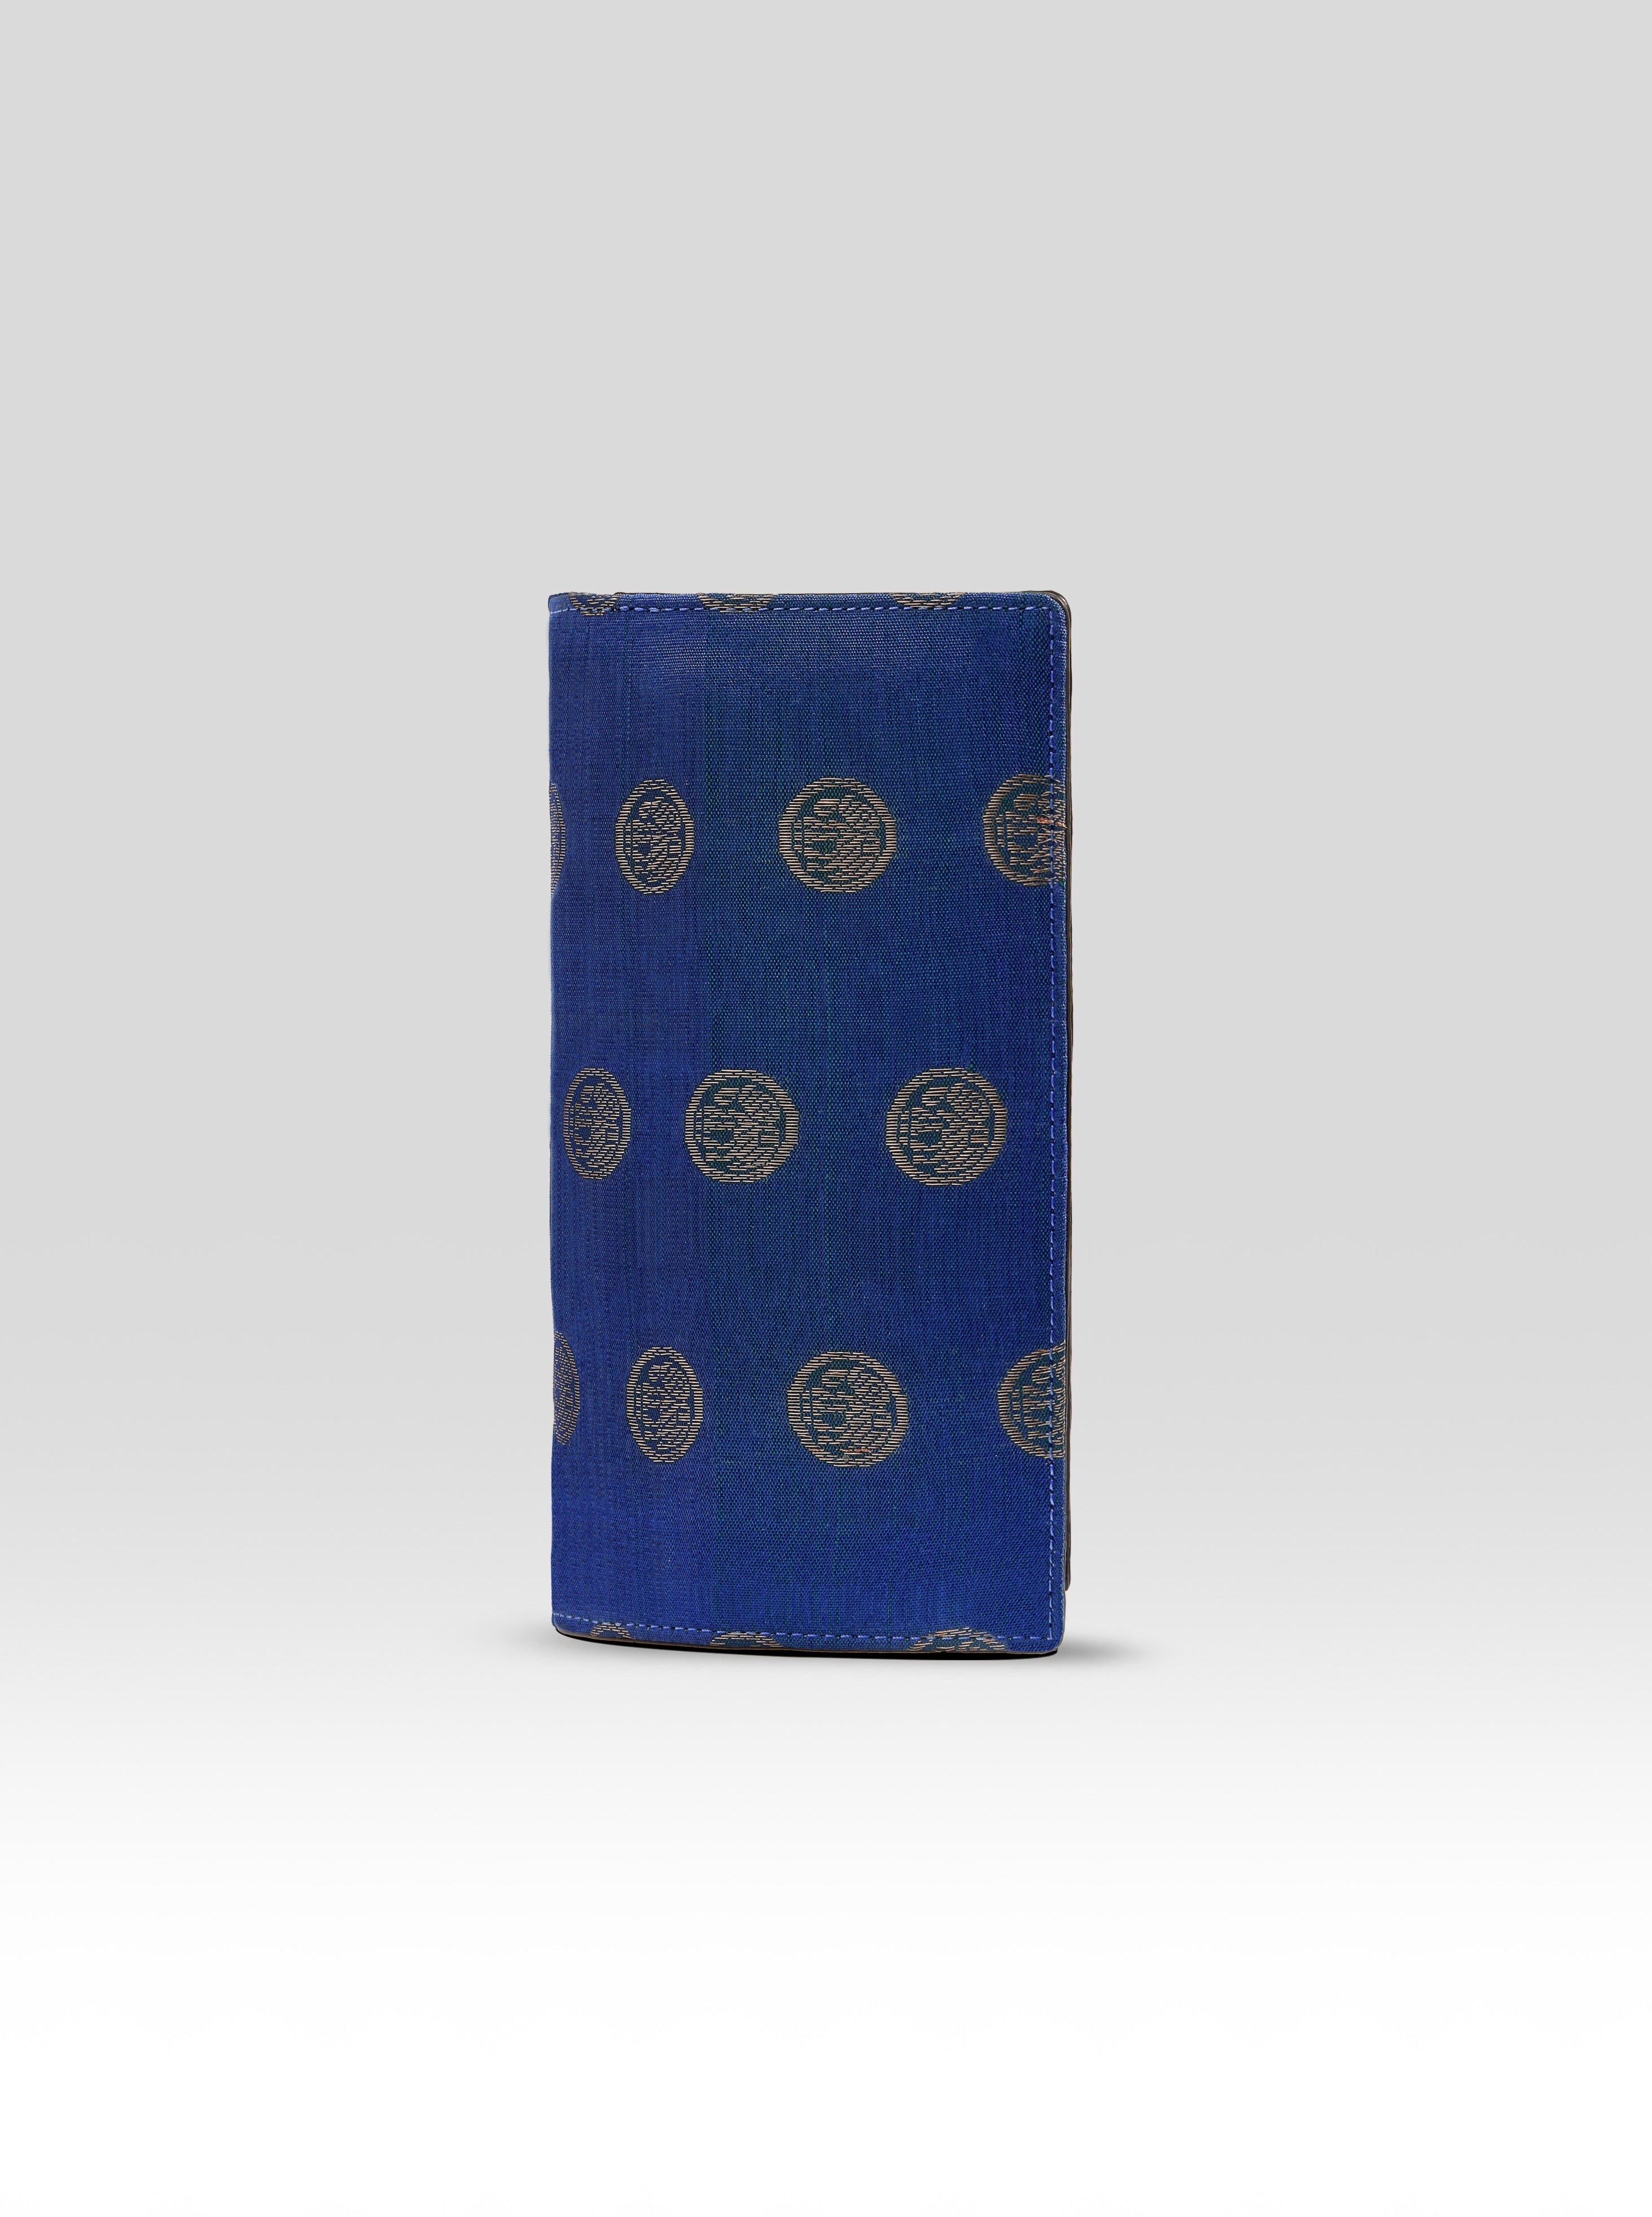 Rudra Long Wallet Peacock Blue & Tan